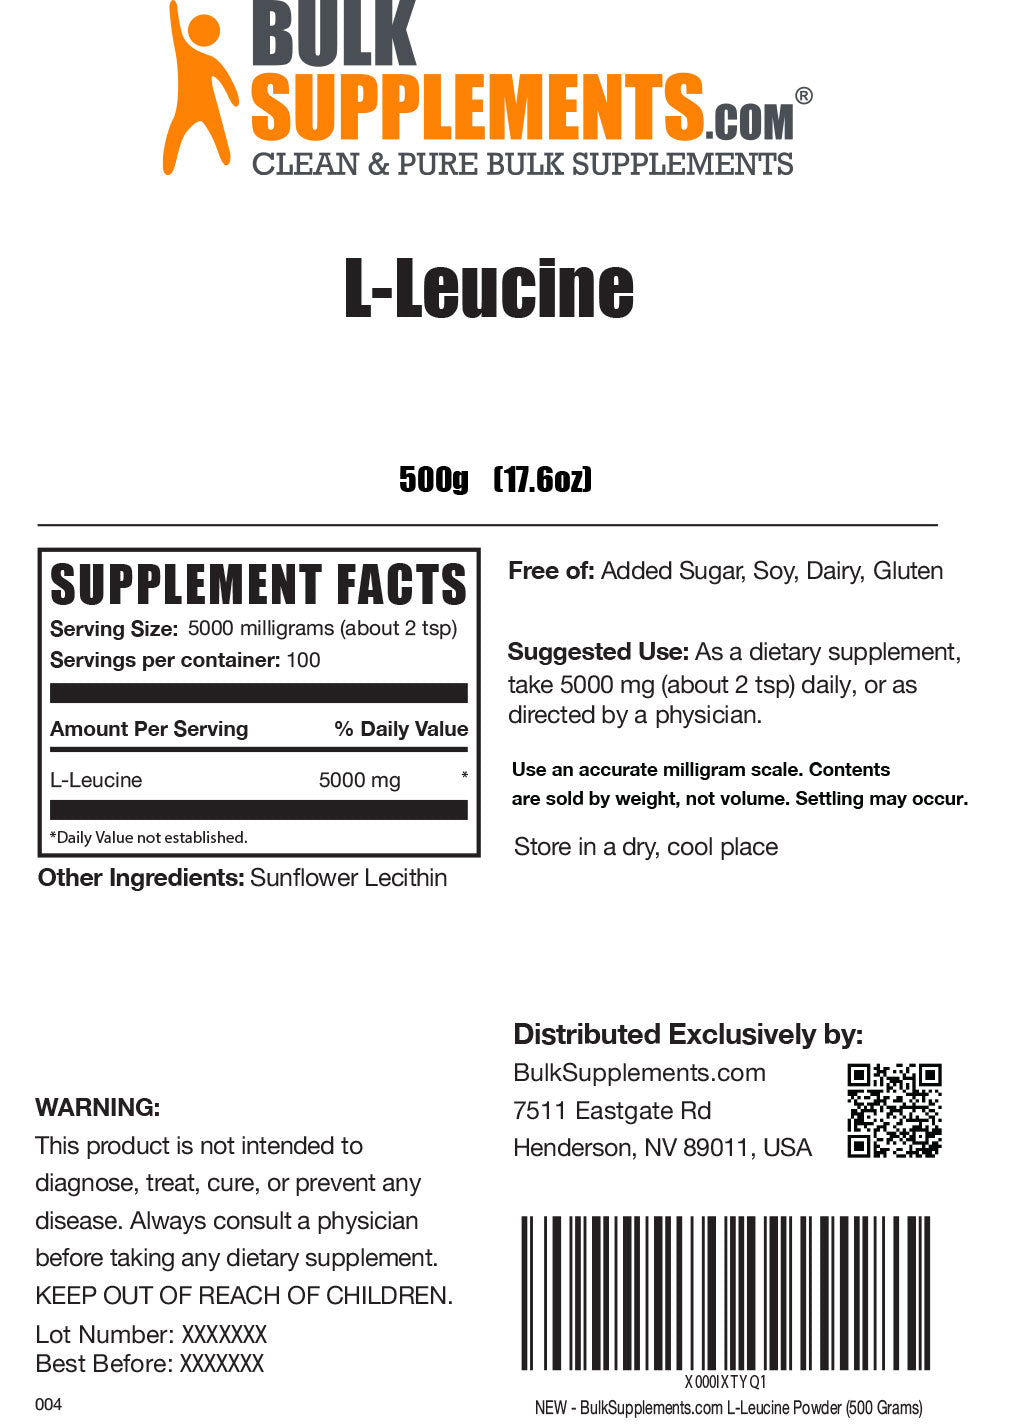 L-Leucine powder label 500g